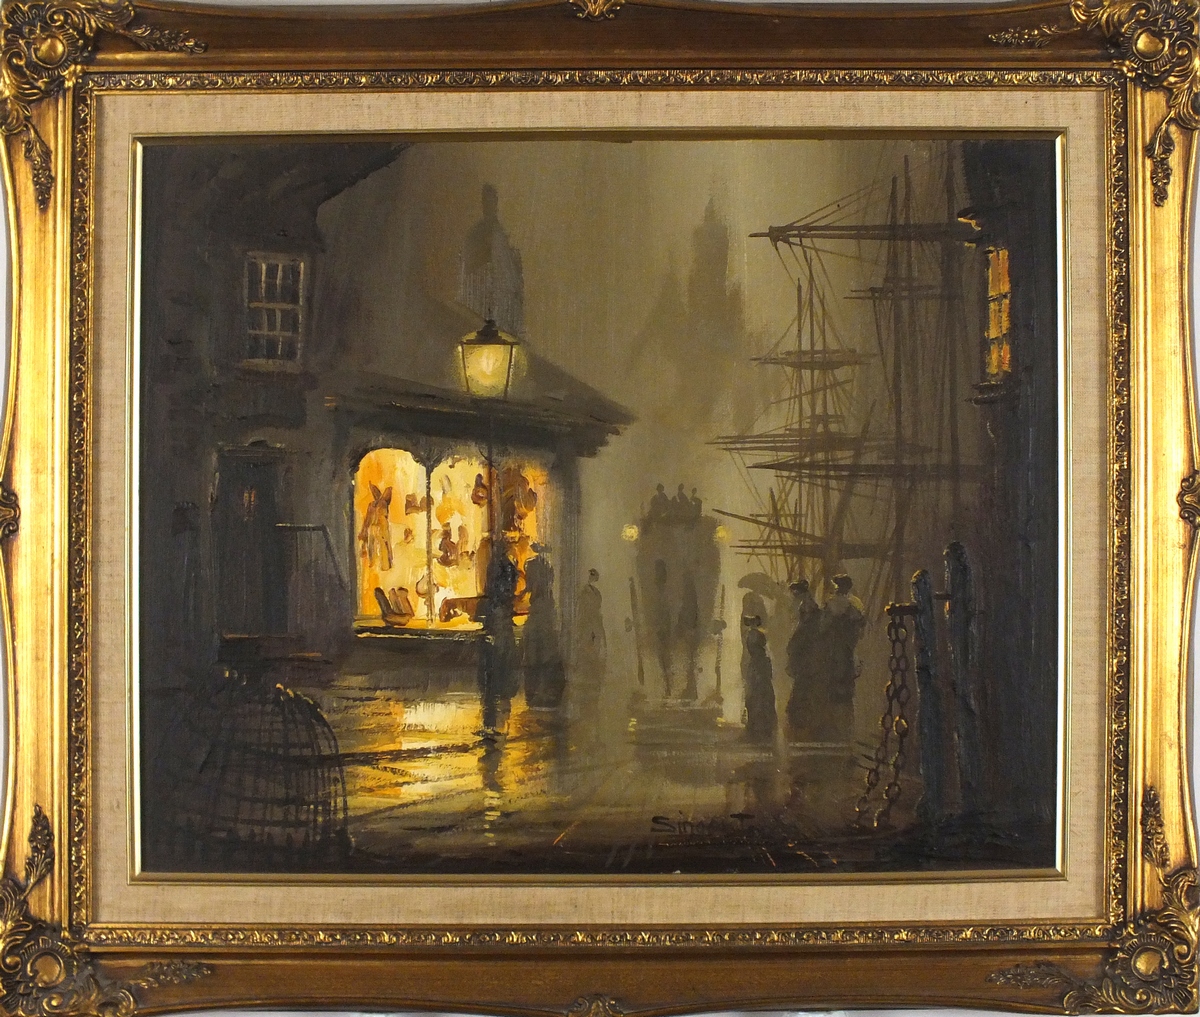 †SINGER-JONES (Donald HUGHES) (b.1933), Oil on canvas, Victorian Dockyard Scene - At Night, Signed, - Image 2 of 2